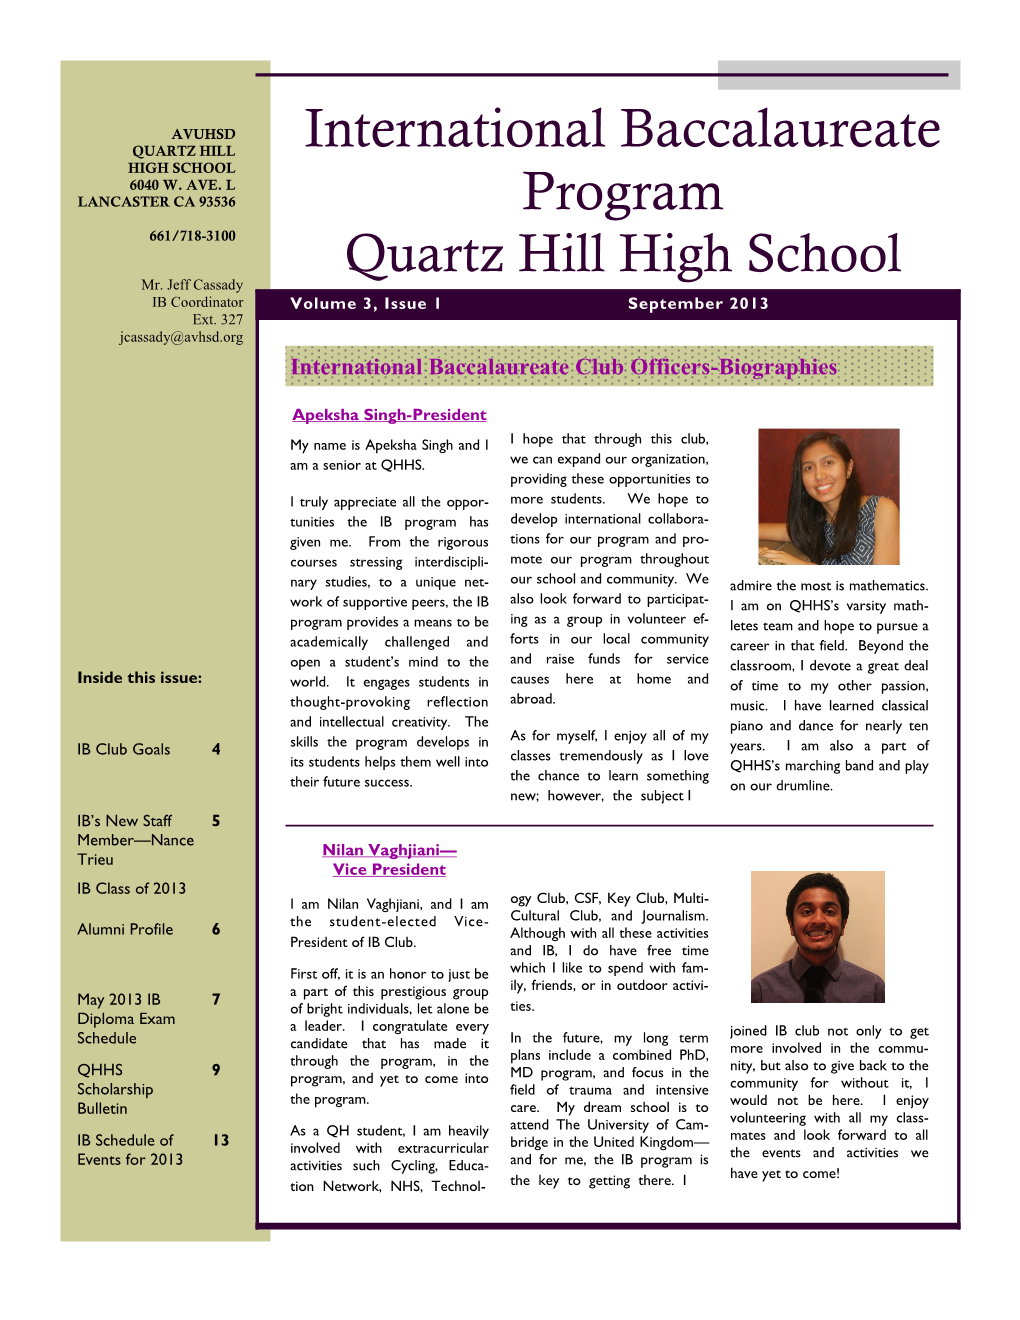 International Baccalaureate Program Quartz Hill High School